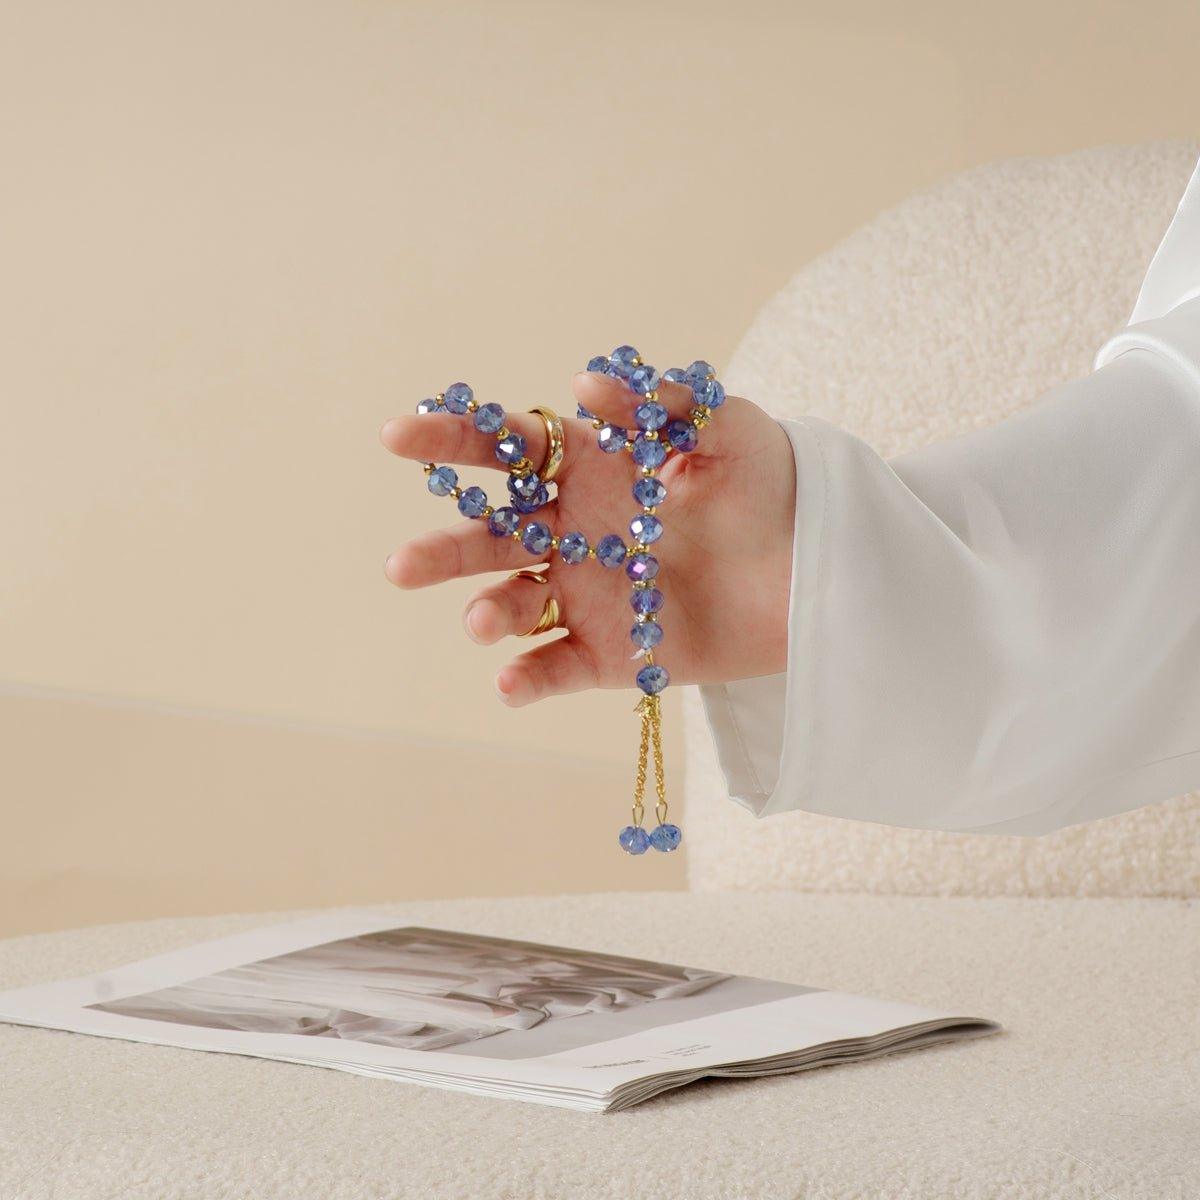 MR061 Crystal Glass Muslim Prayer Tasbeeh 33pcs beads - Mariam's Collection